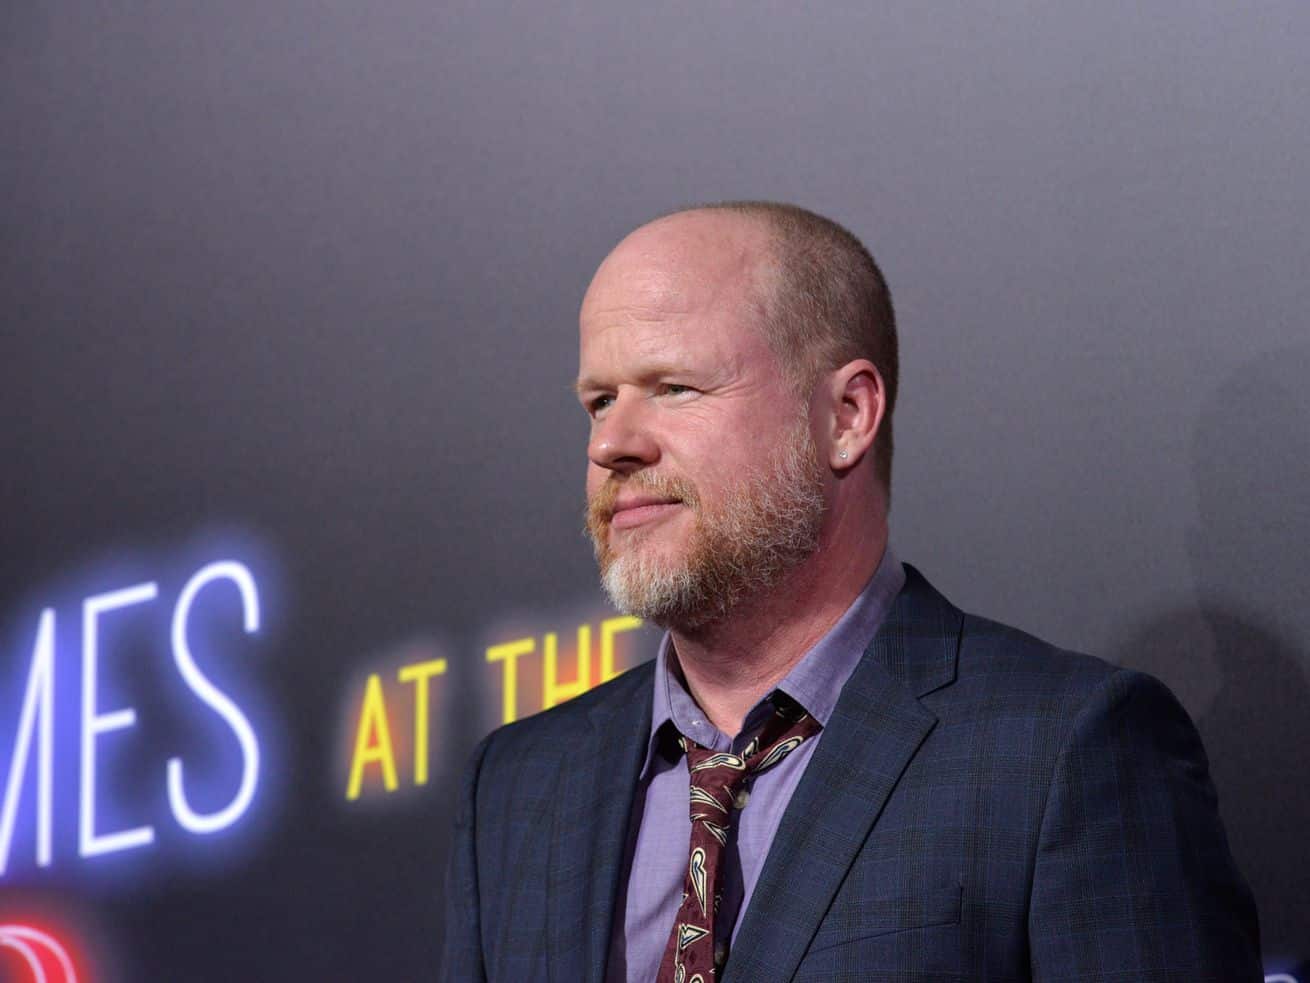 How Joss Whedon’s feminist legacy unraveled